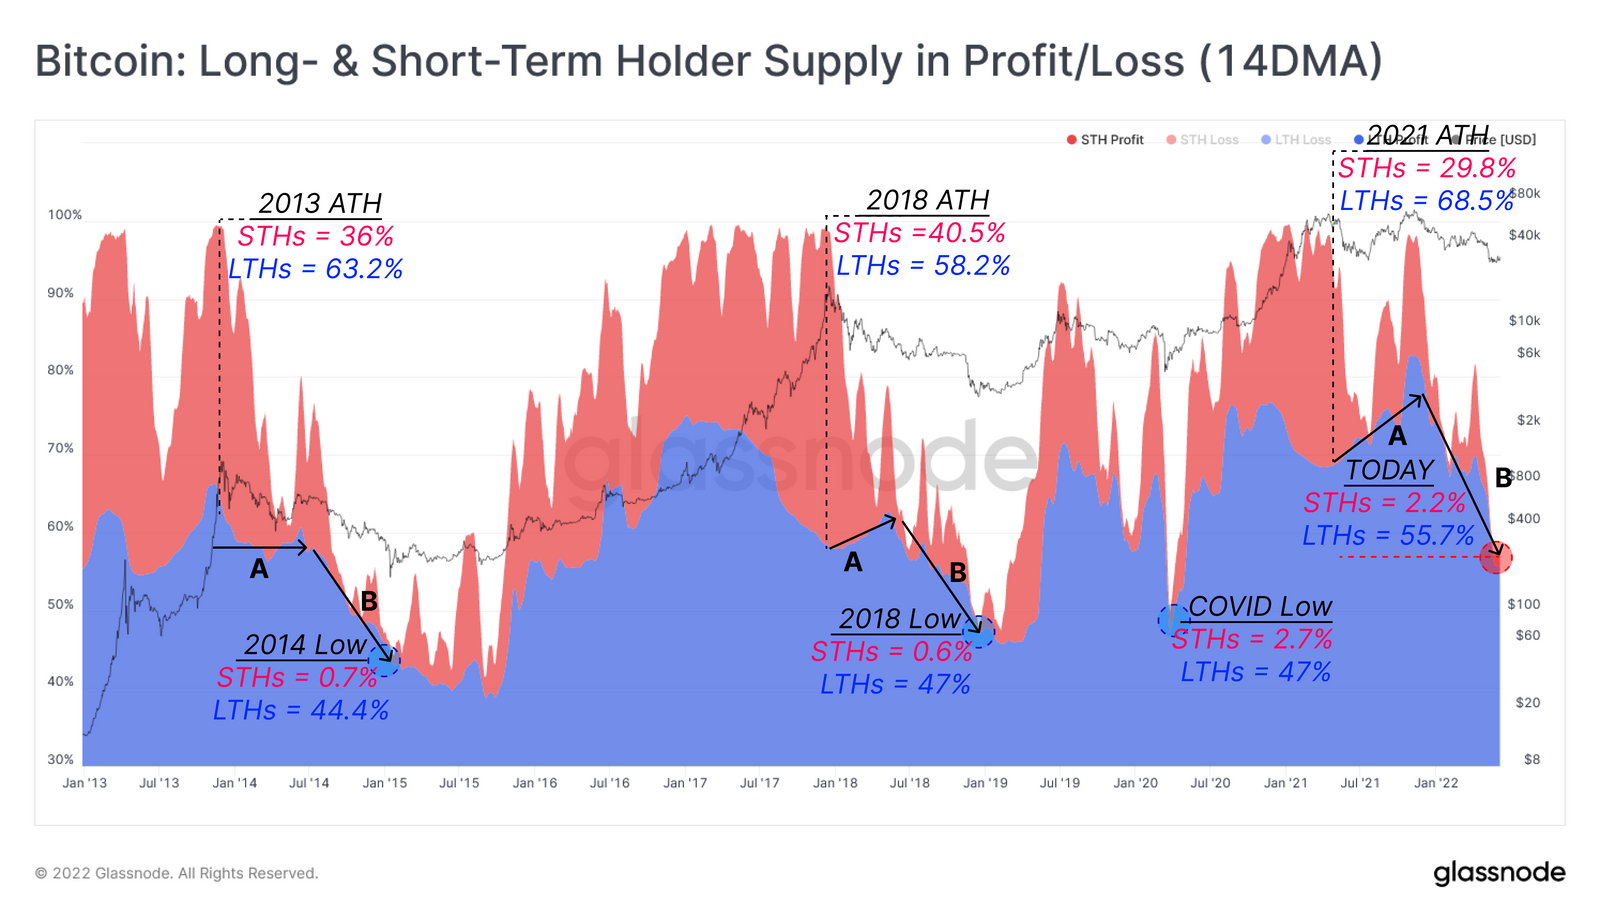 Bitcoin long- and short-term supply in profit/loss (14DMA)